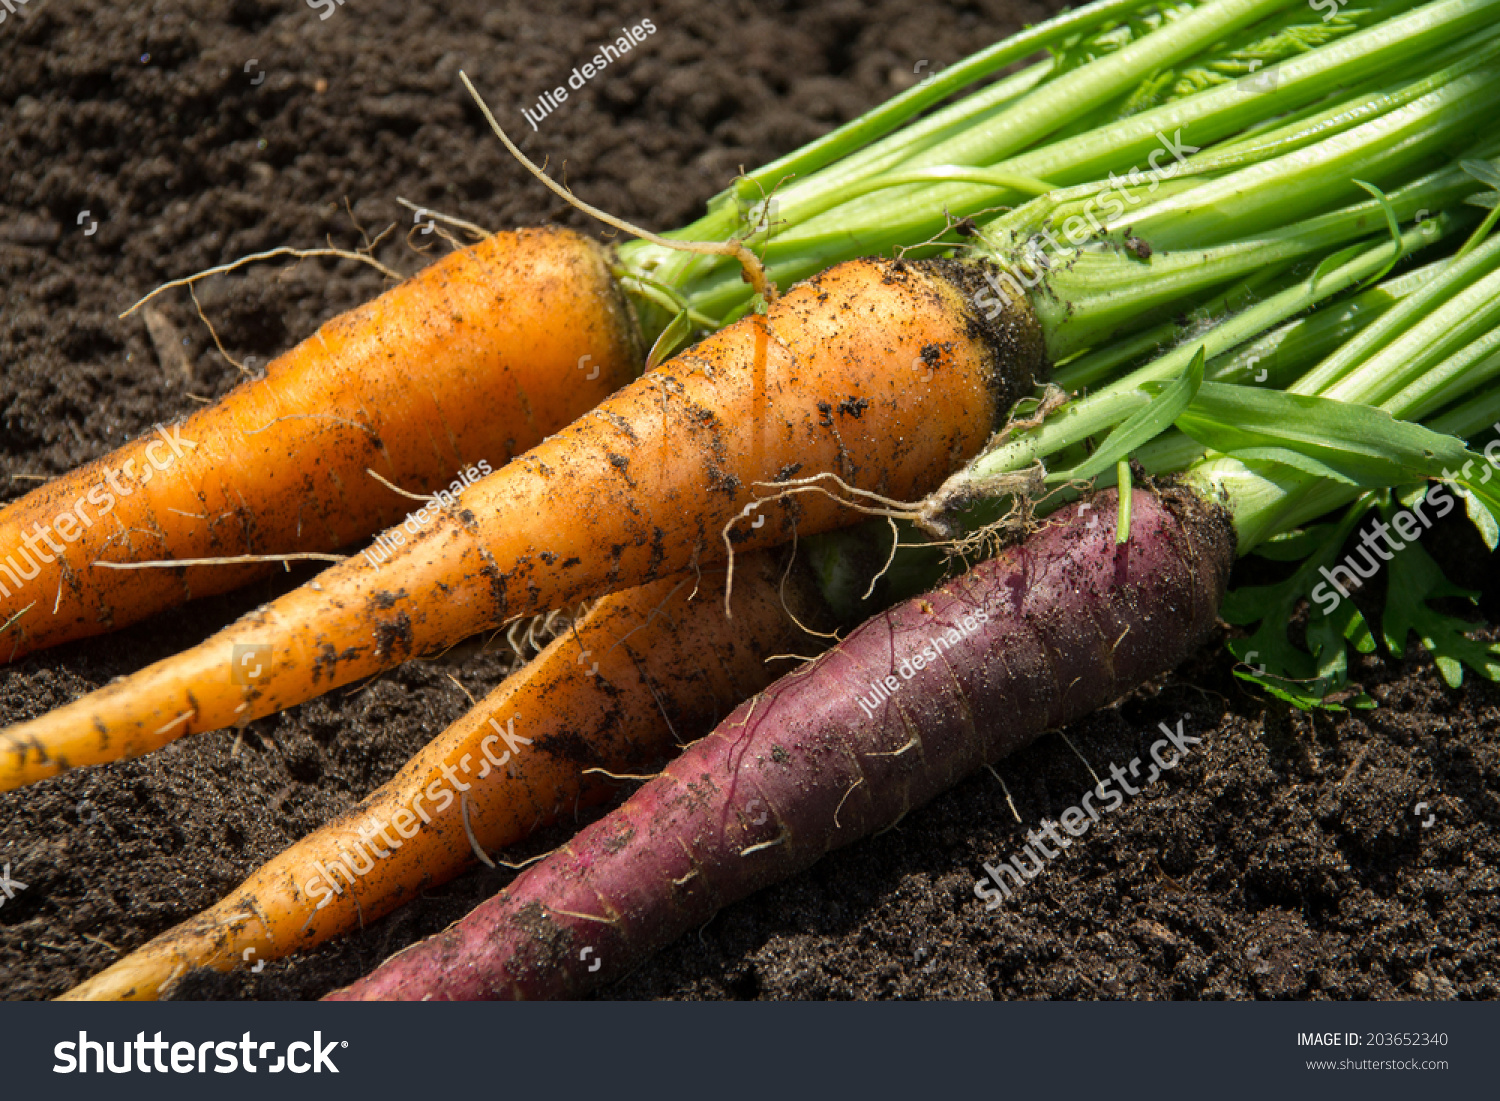 orange and purple carrot crop in the garden #203652340